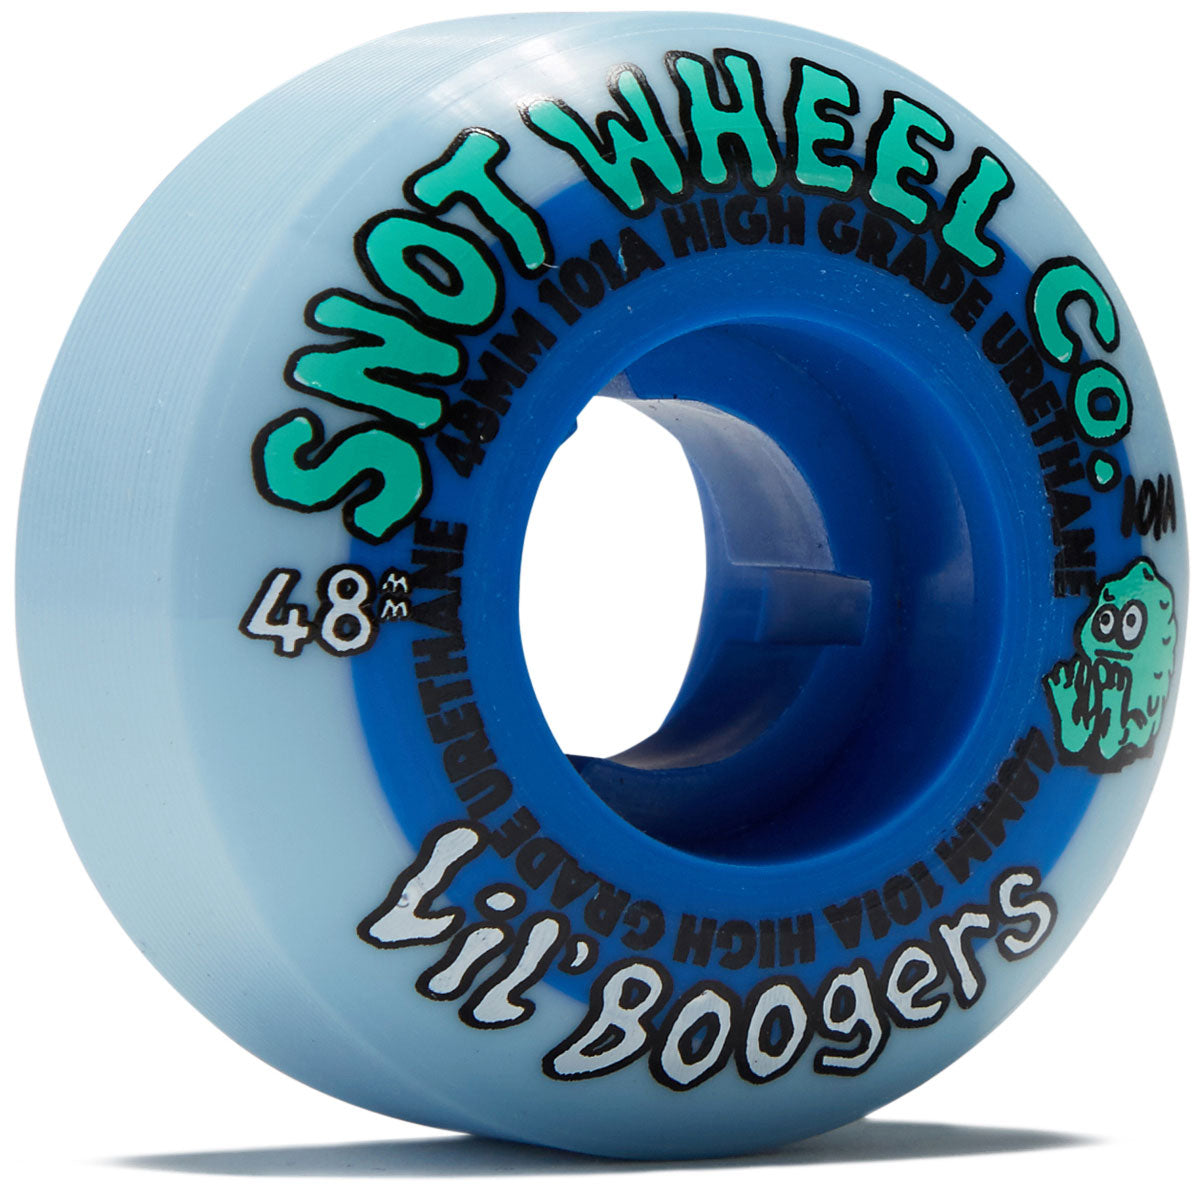 Snot Lil Boogers 101a Skateboard Wheels - Blue Core - 48mm image 1